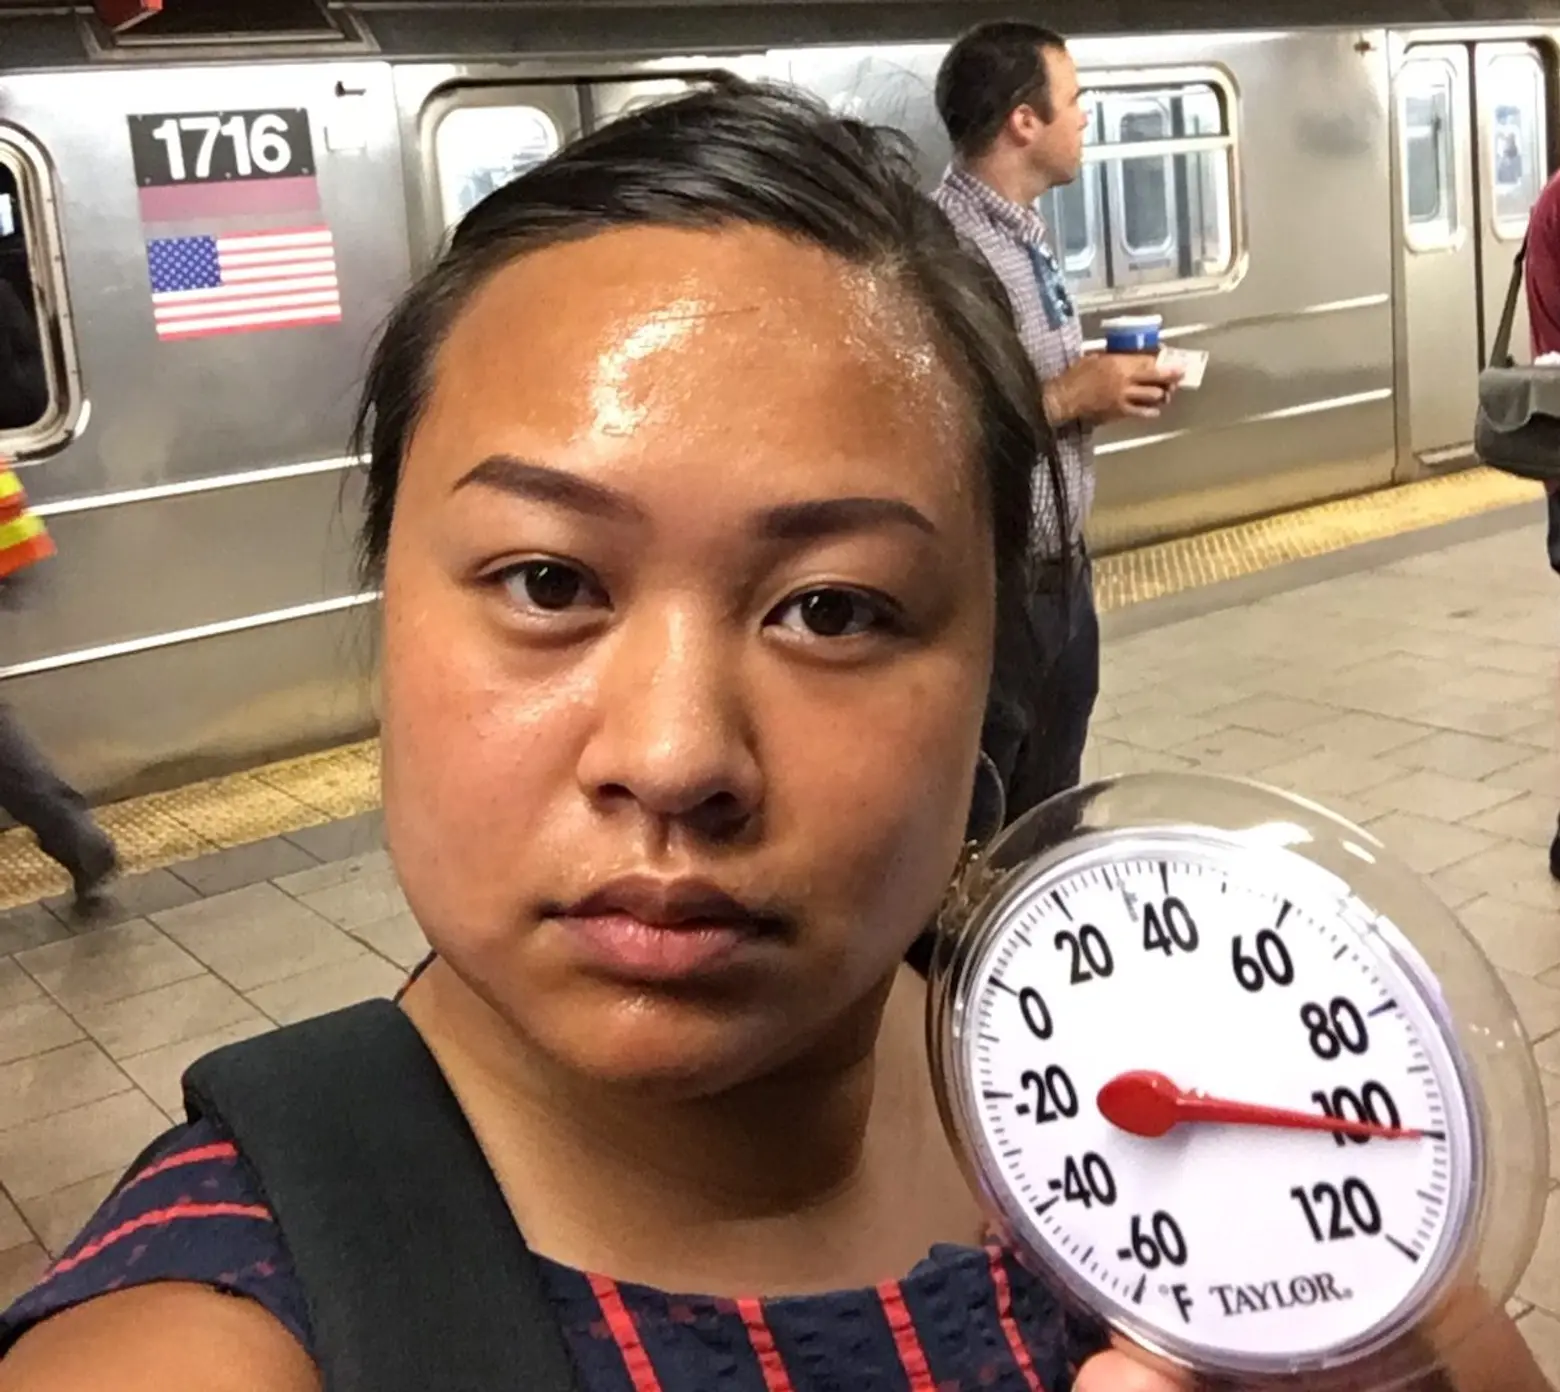 RPA report shows subway platform temperatures of 104 degrees